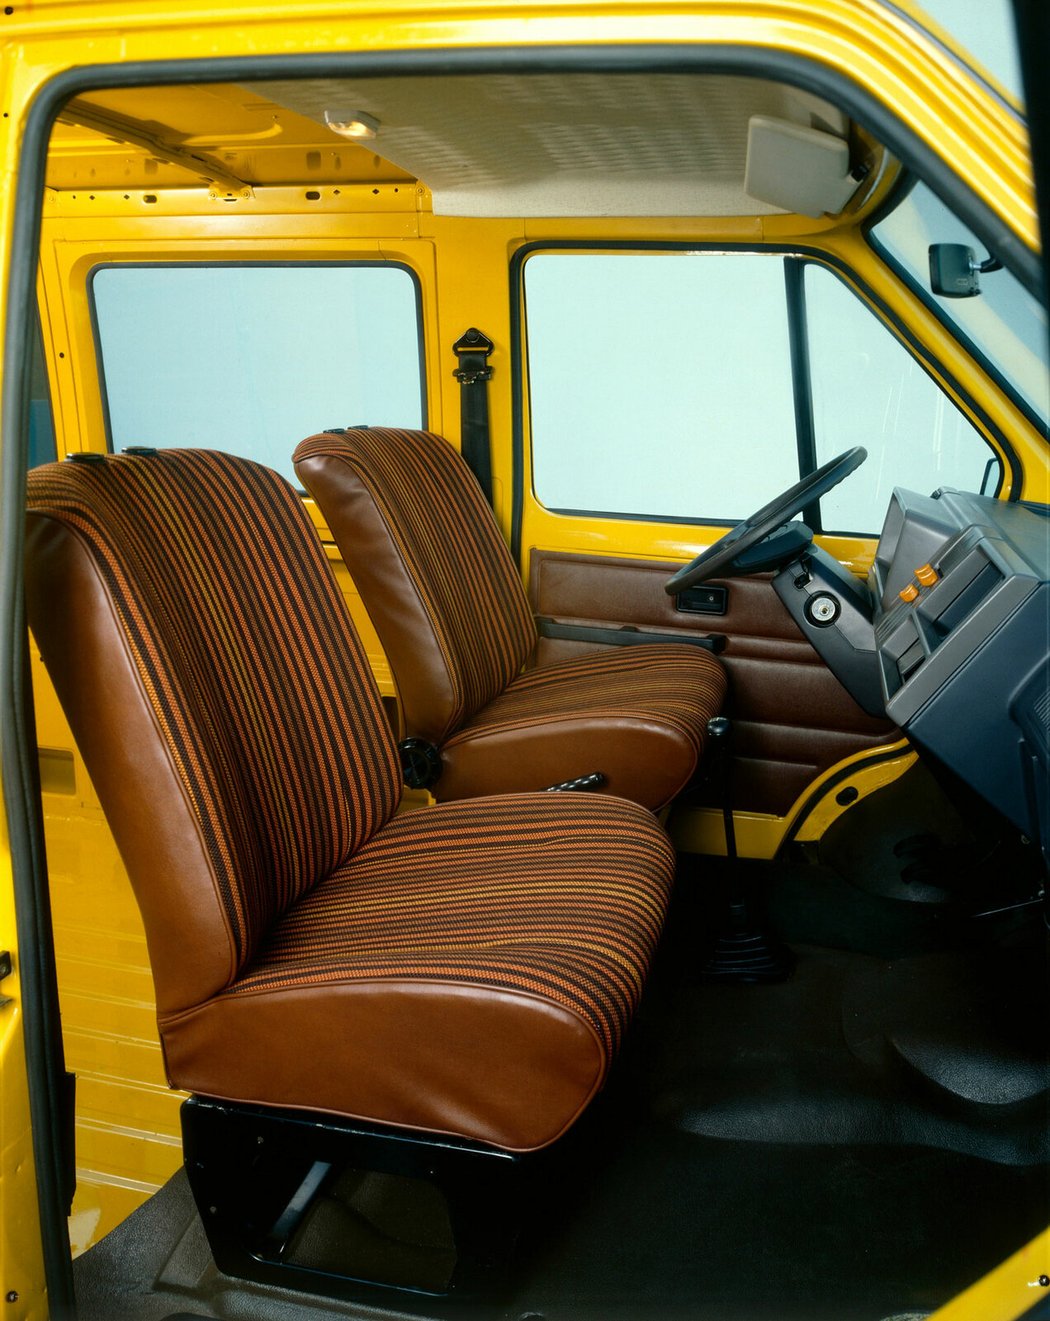 Renault Trafic Combi (1981)